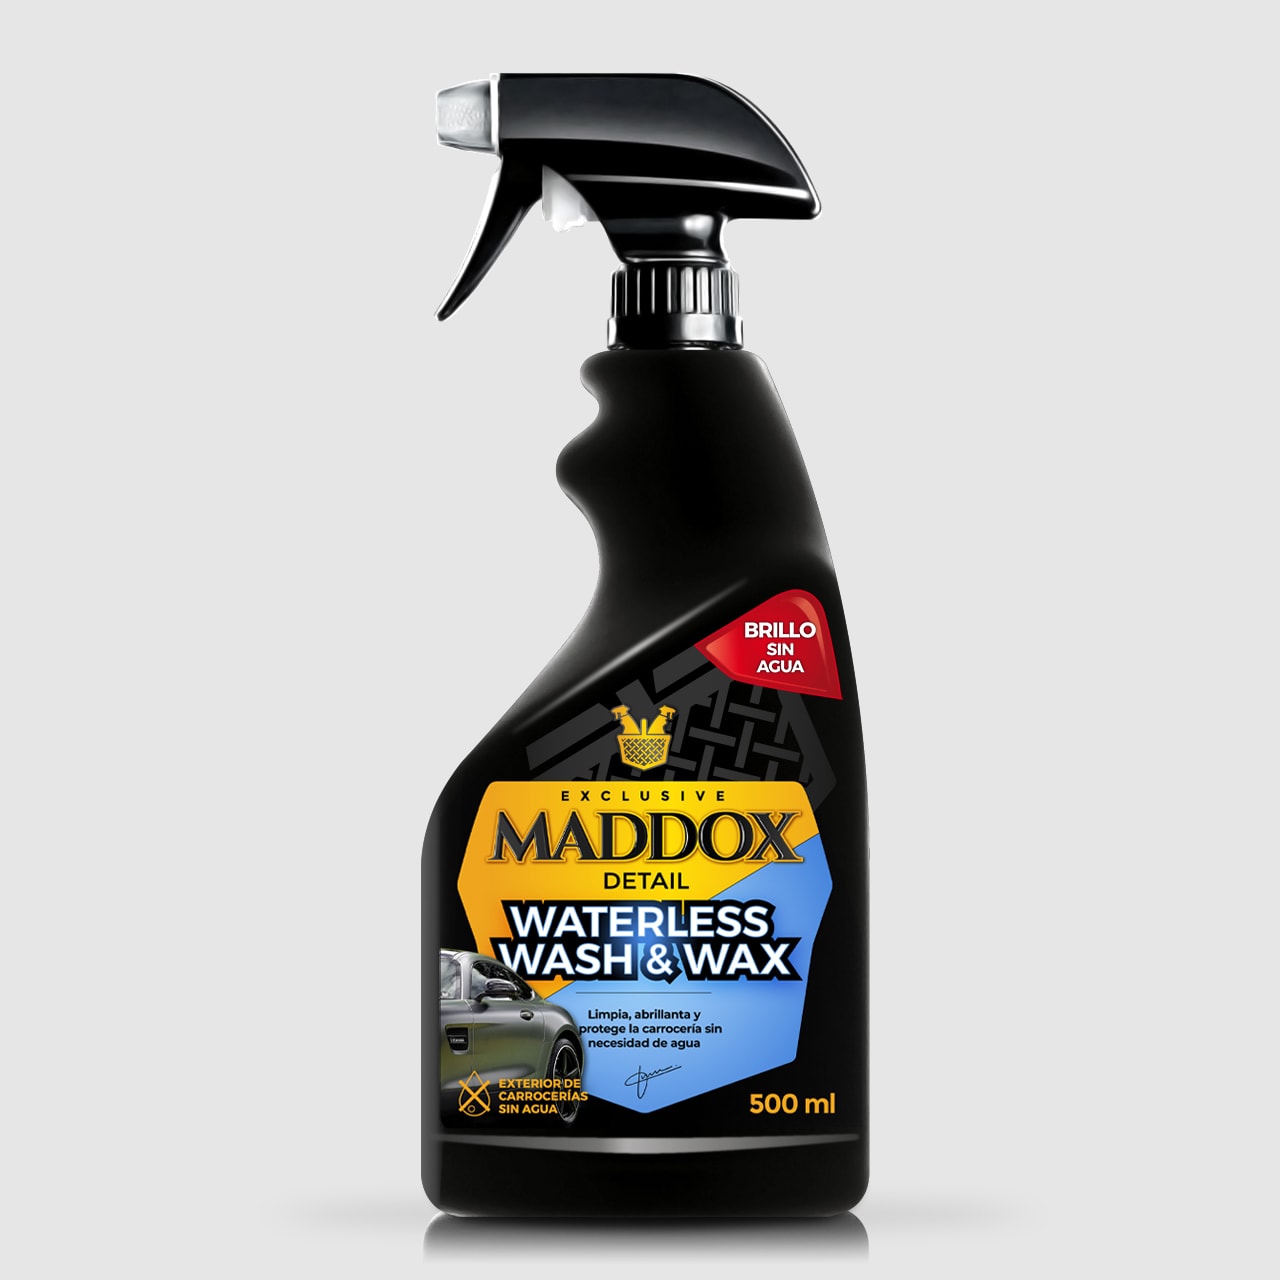 WATERLESS WASH & WAX – Maddox Detail